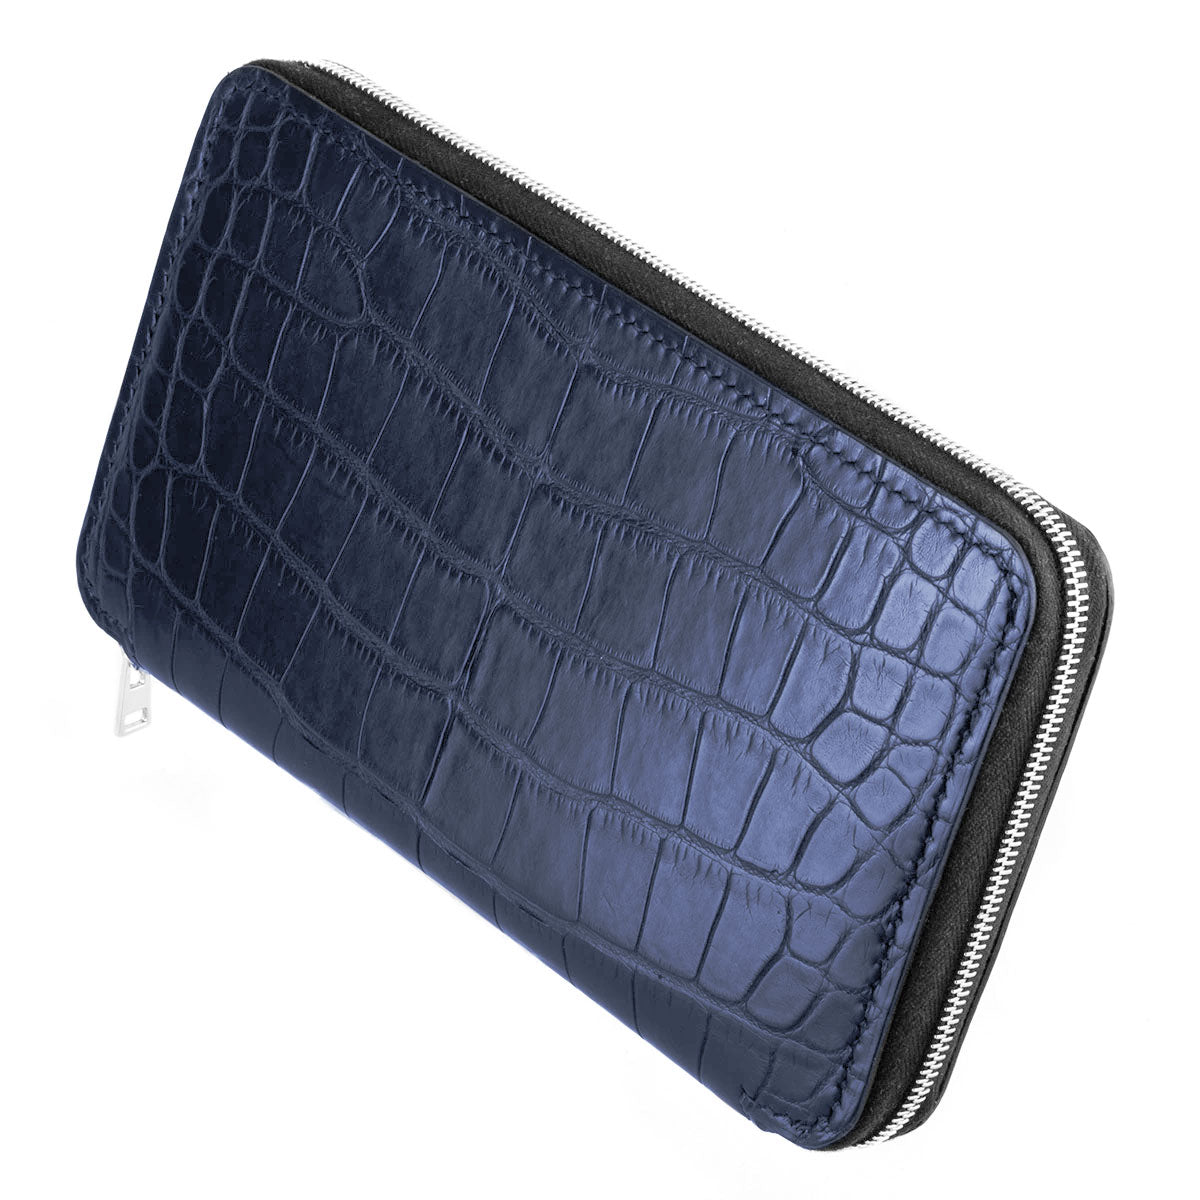 « Platinum » Zipped wallet - Alligator / crocodile